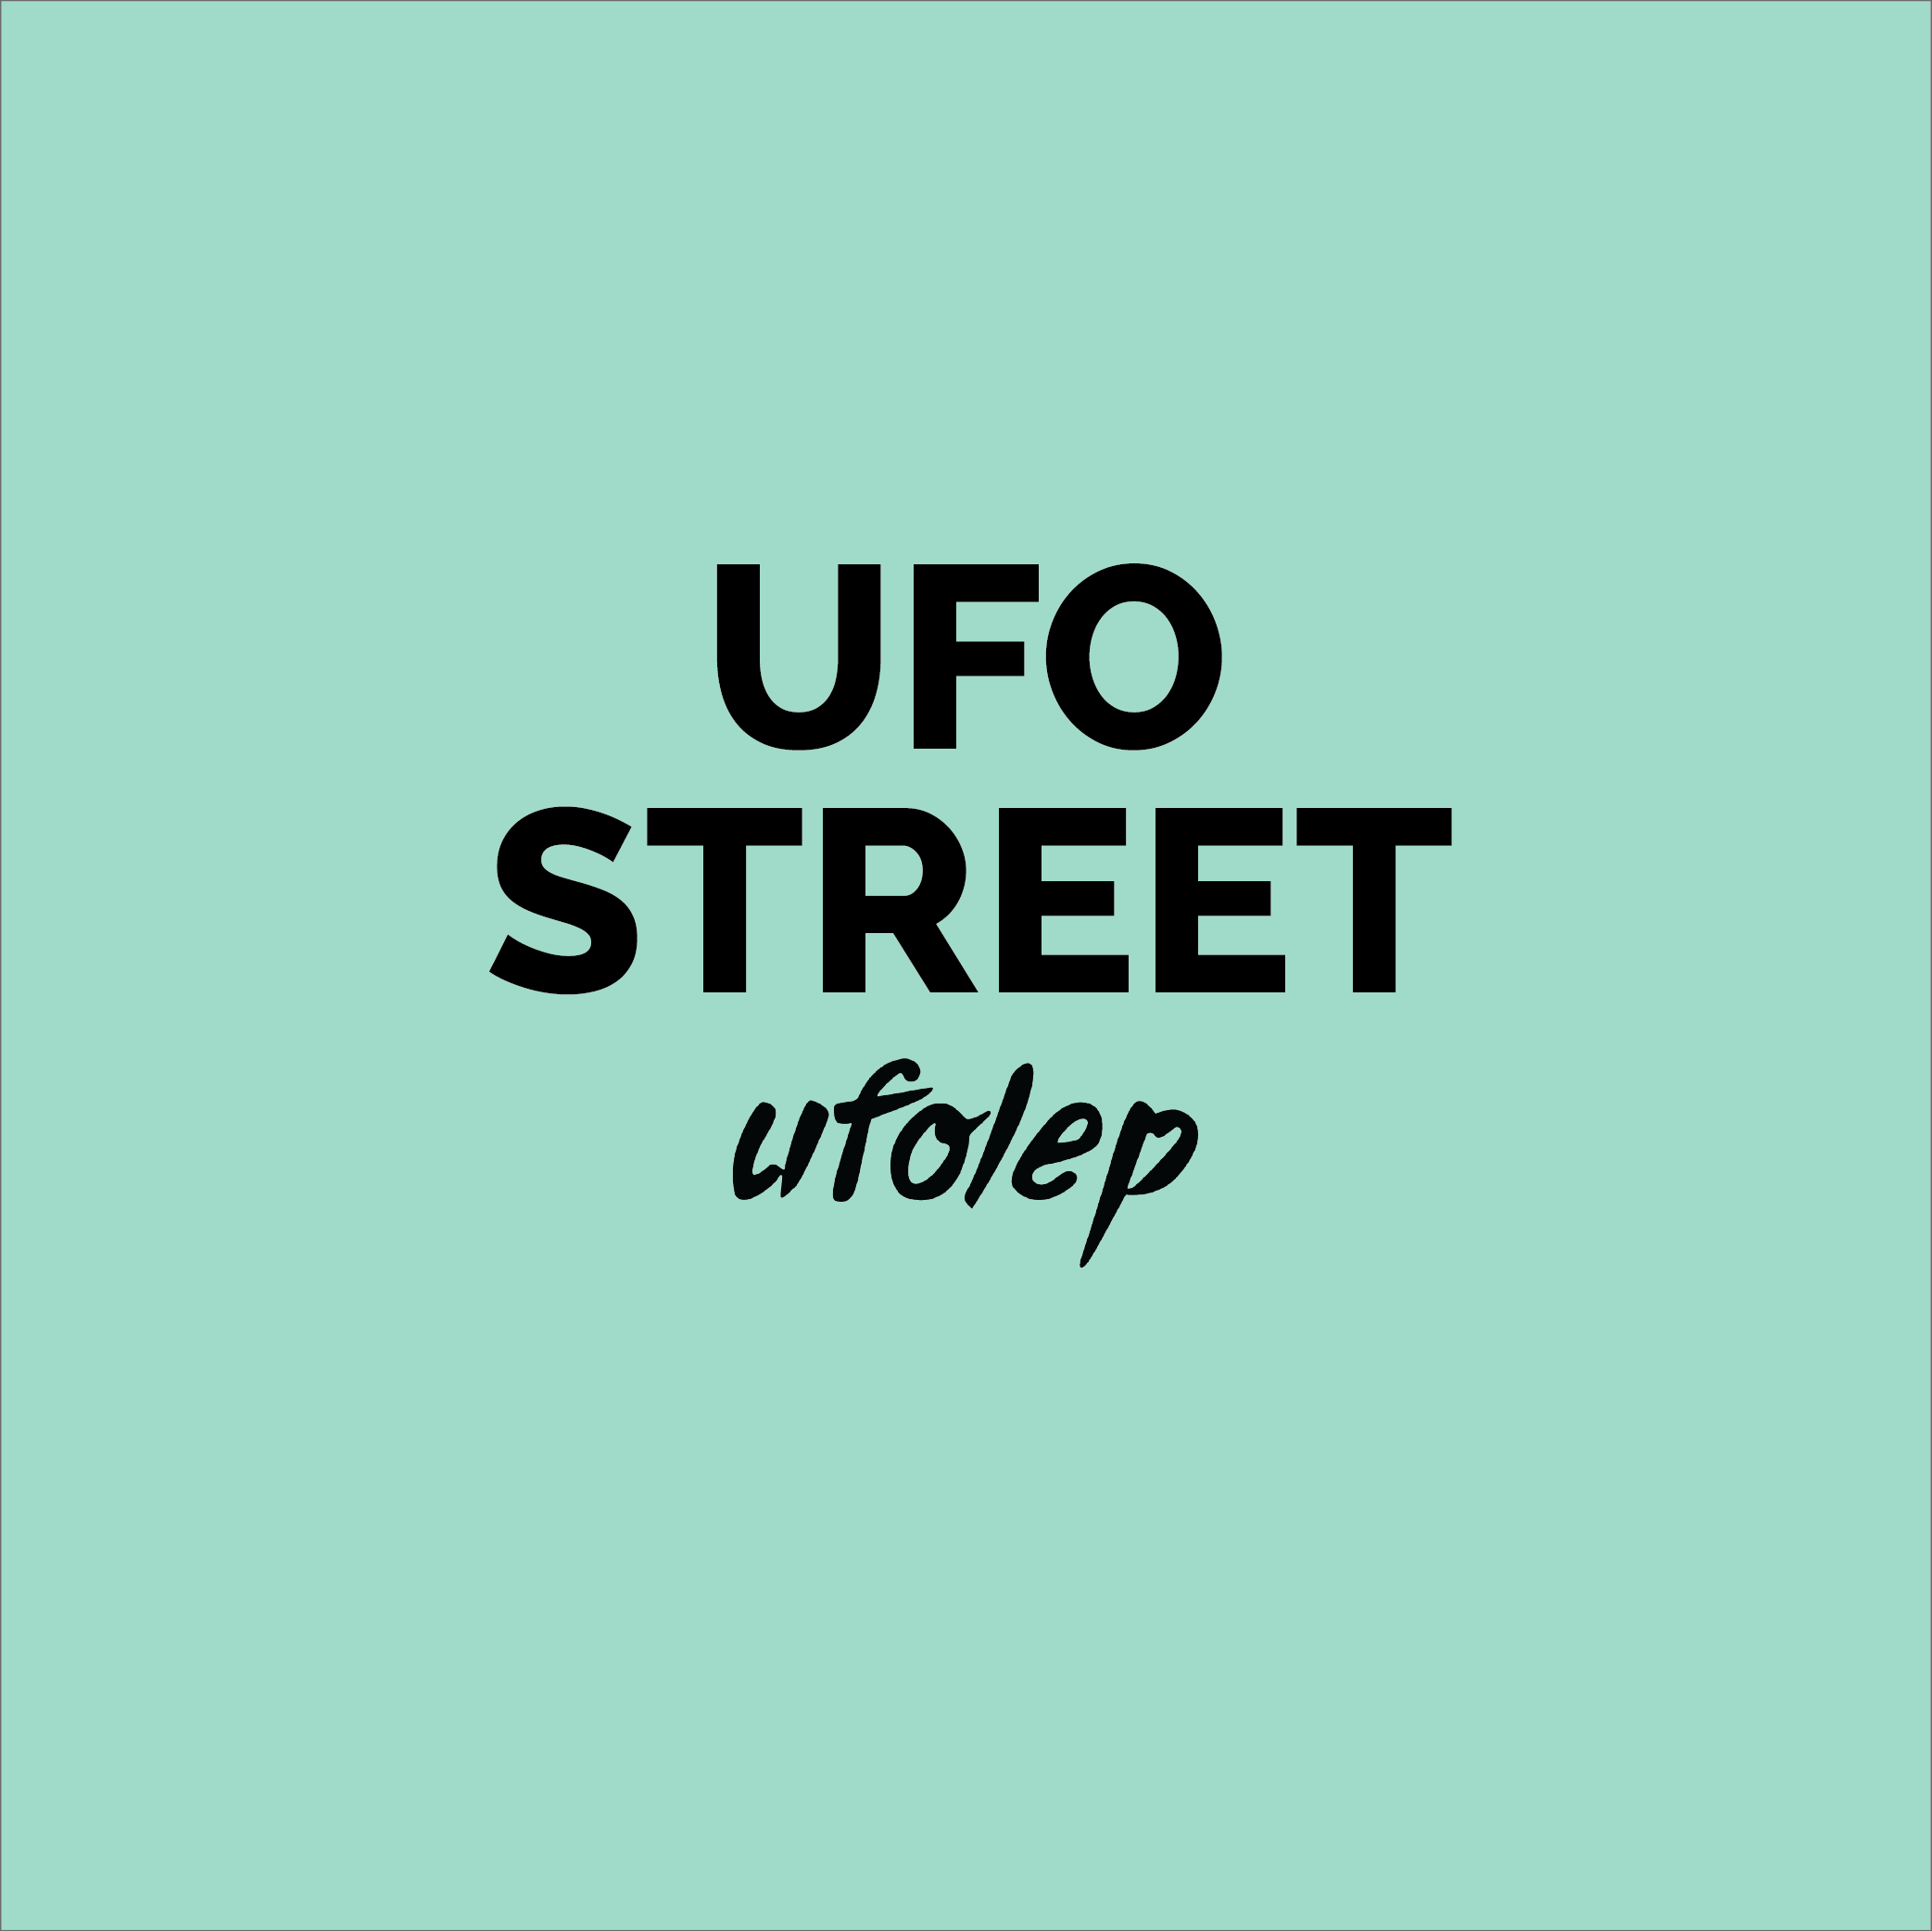 UFO STREET